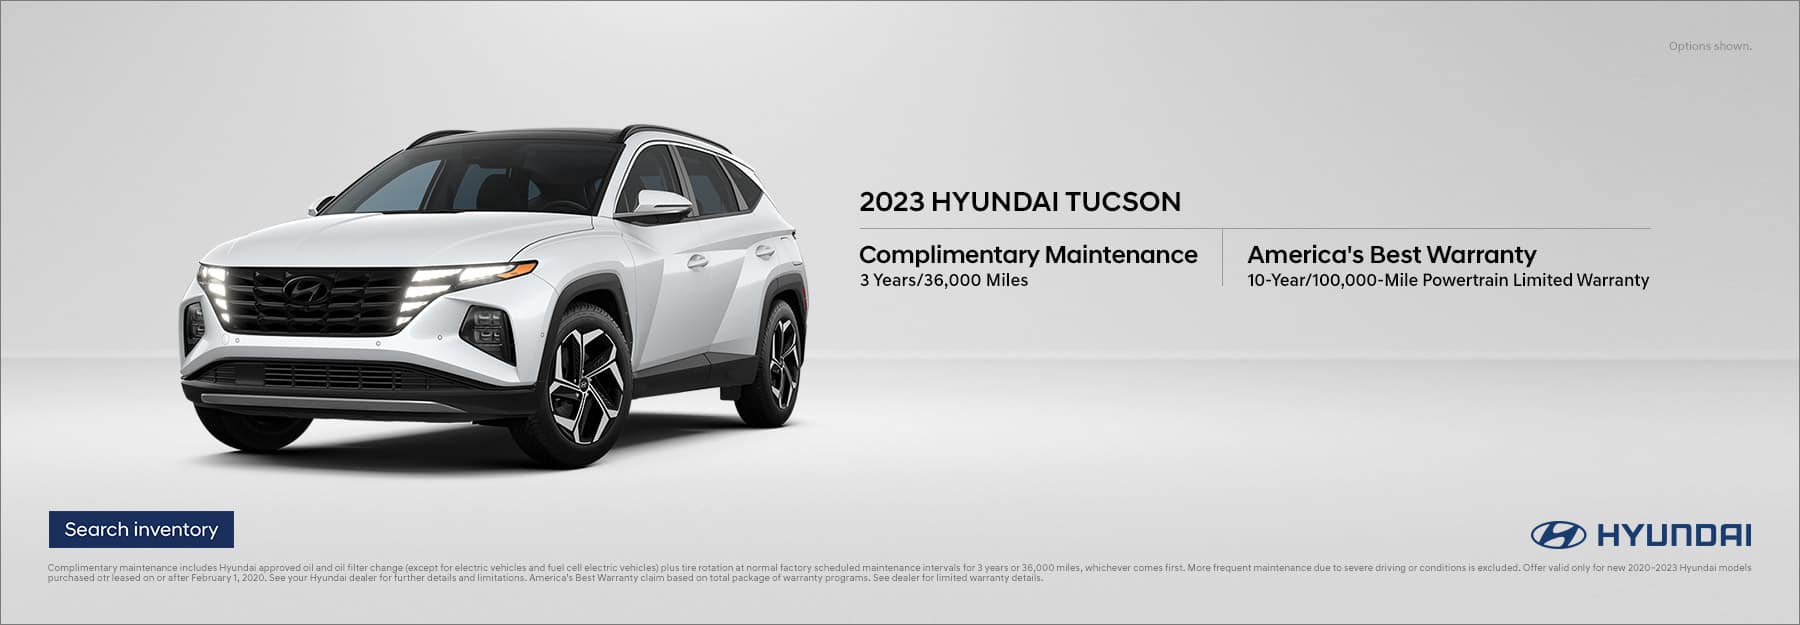 2023 Hyundai Tucson offer